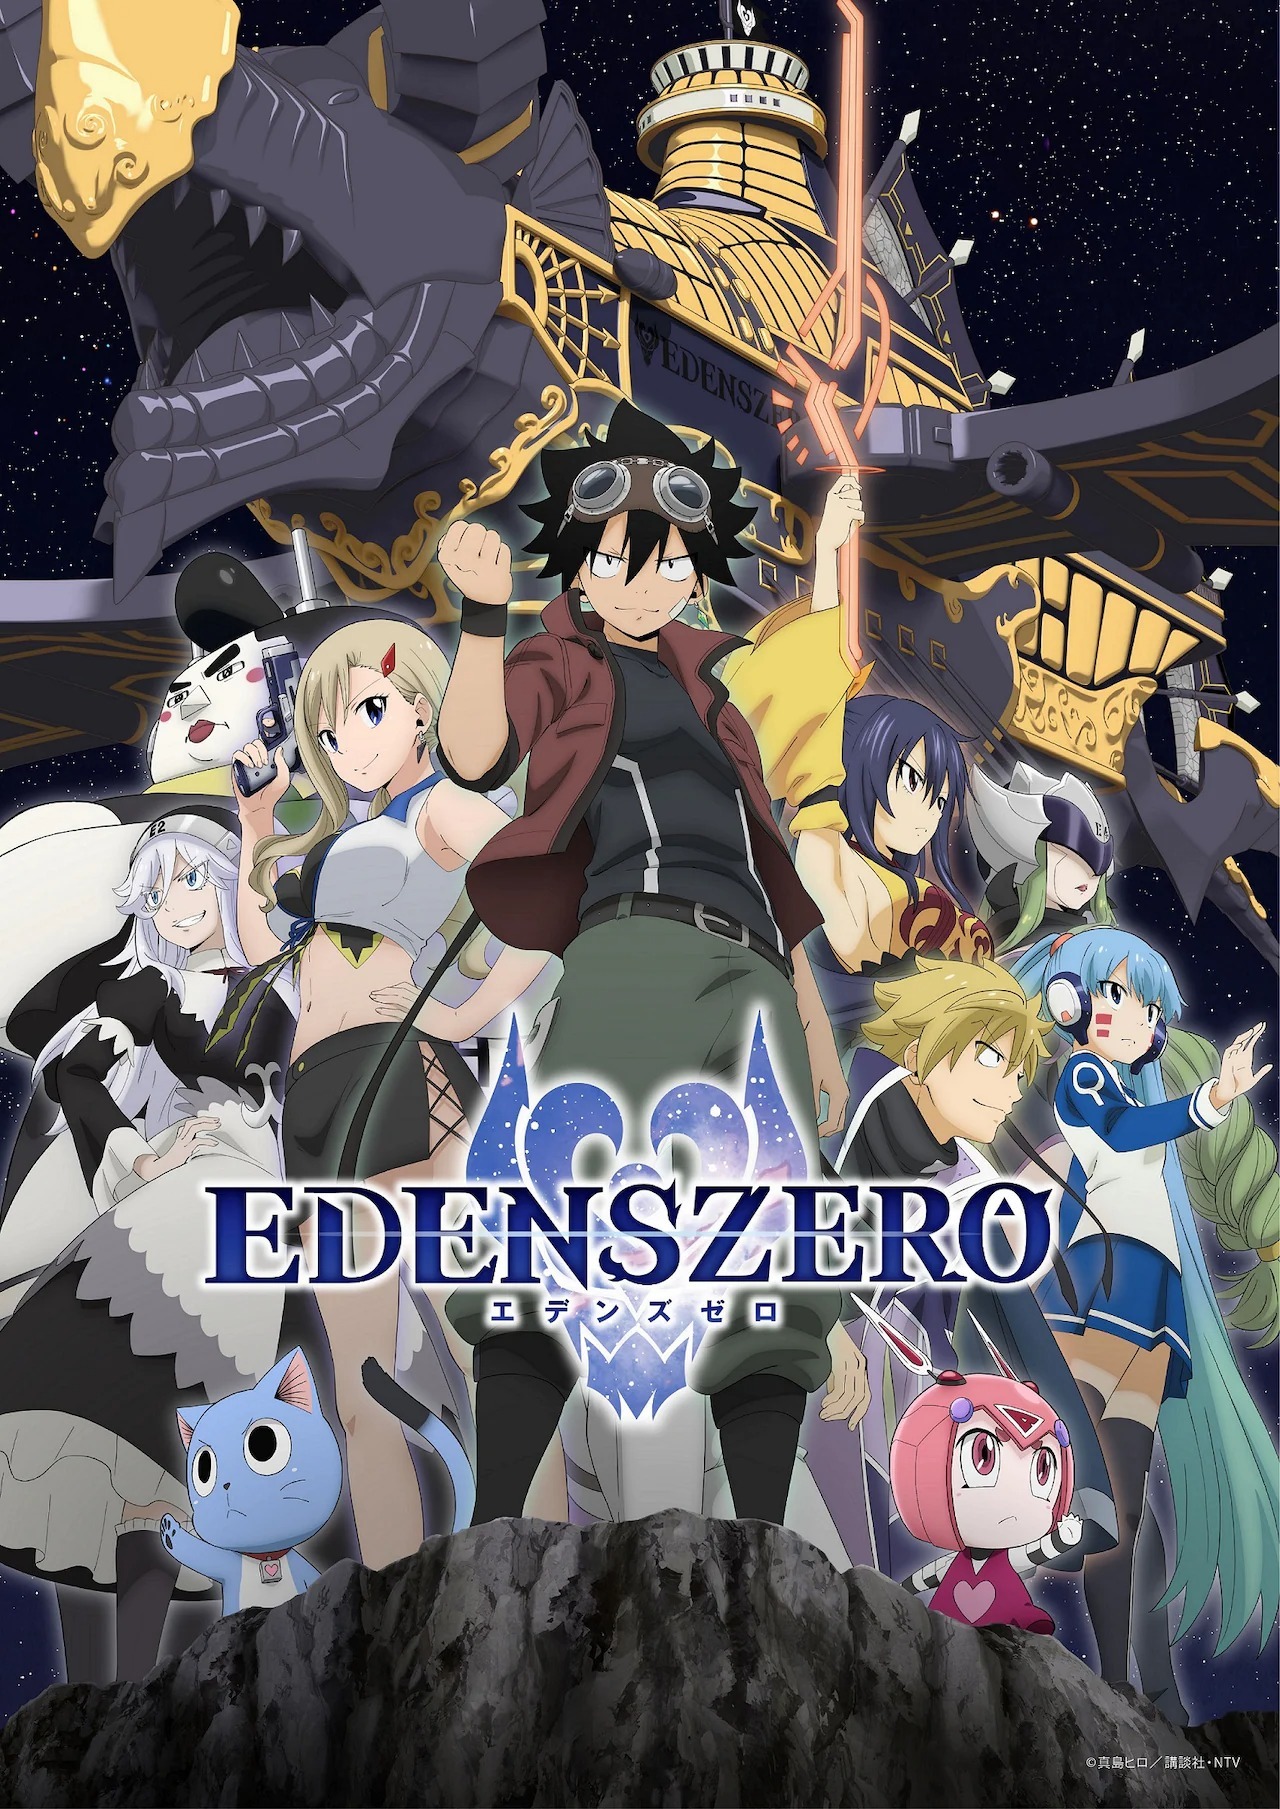 Fairy Tail' Creator's New Series Eden's Zero & Reveals Main